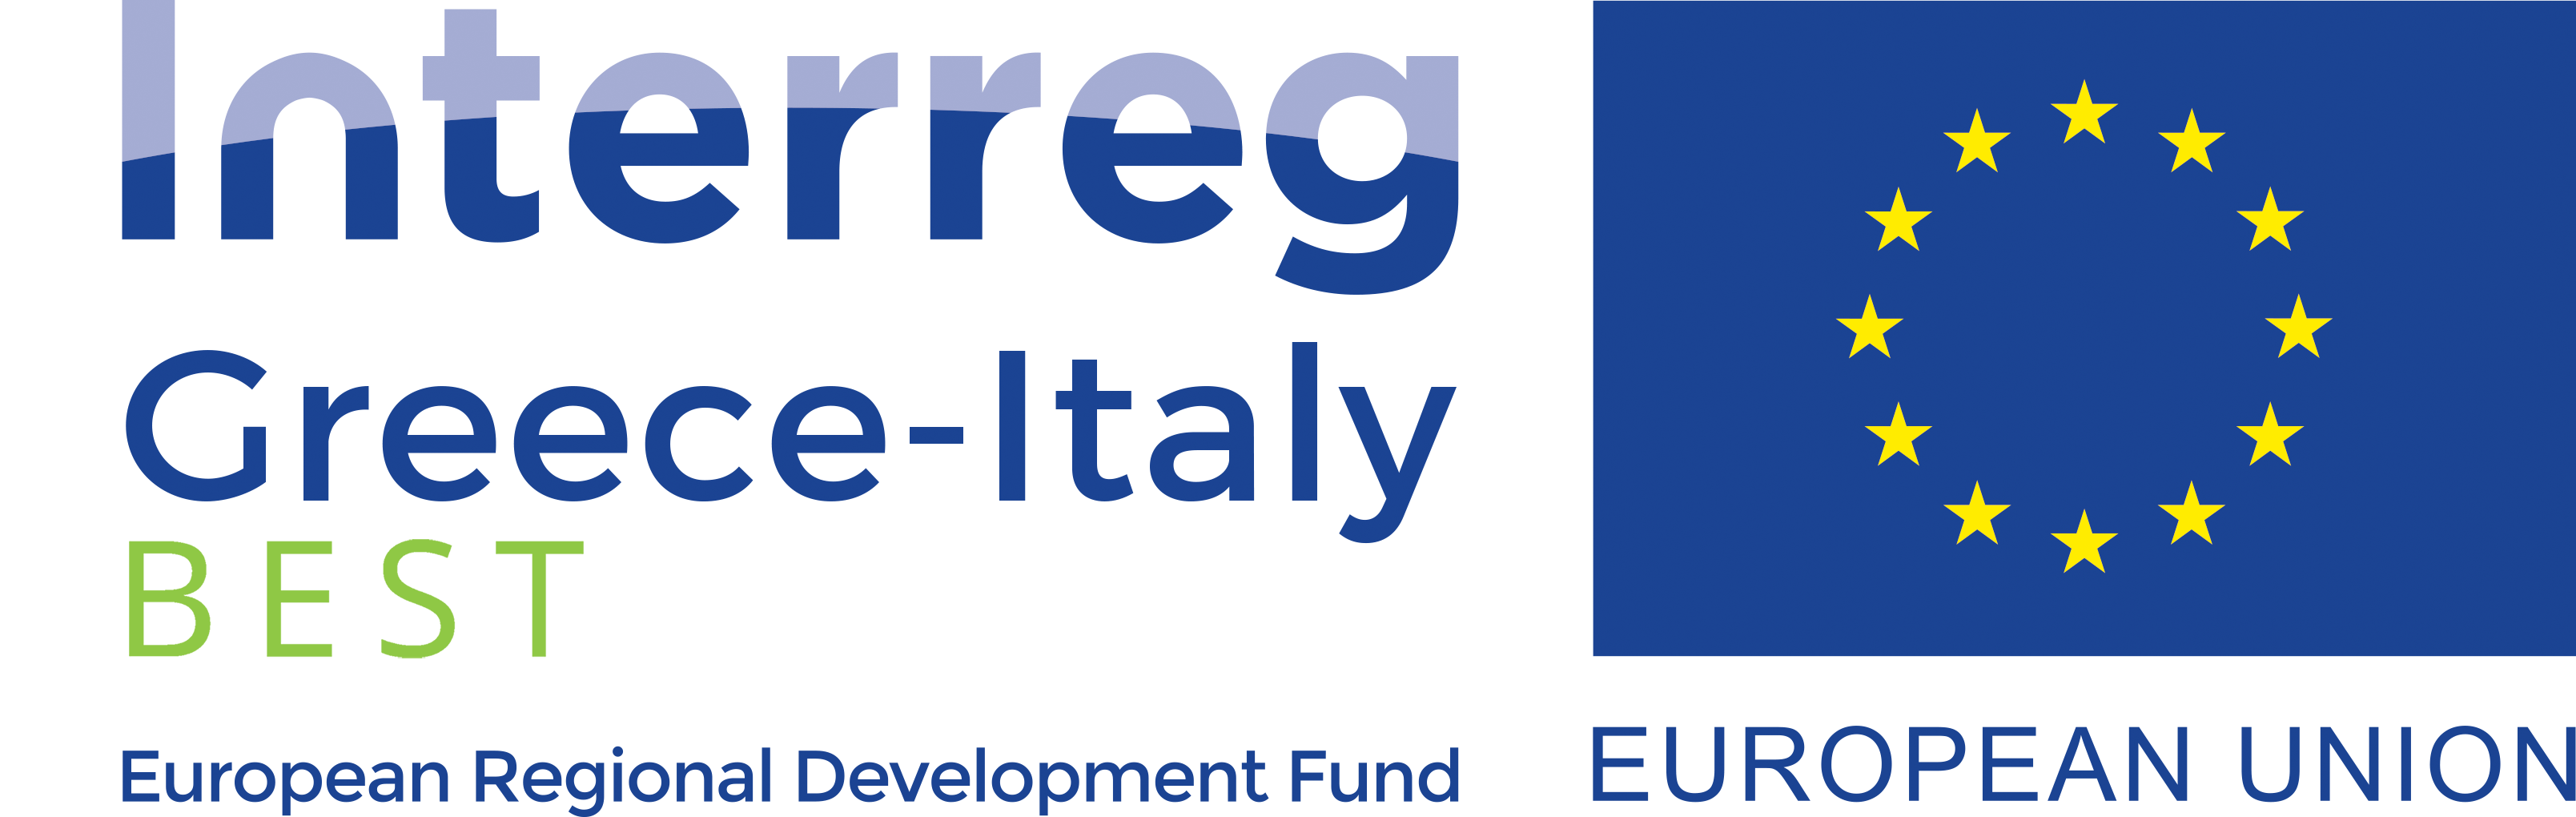 Interreg Gr_It Project Logo PA2 with ERDF